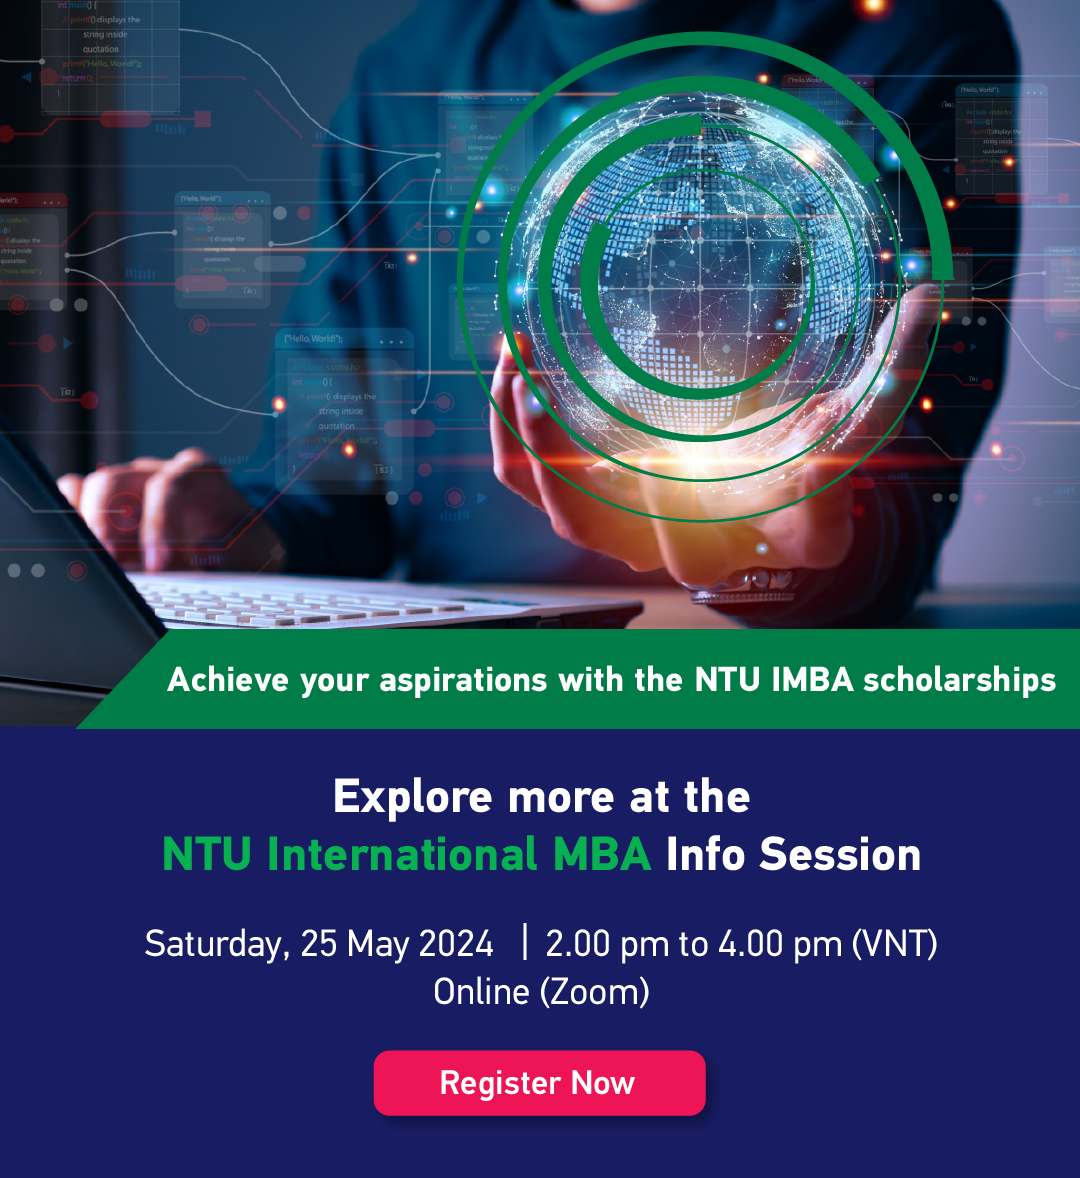 NTU IMBA Info Session 25 May 2024